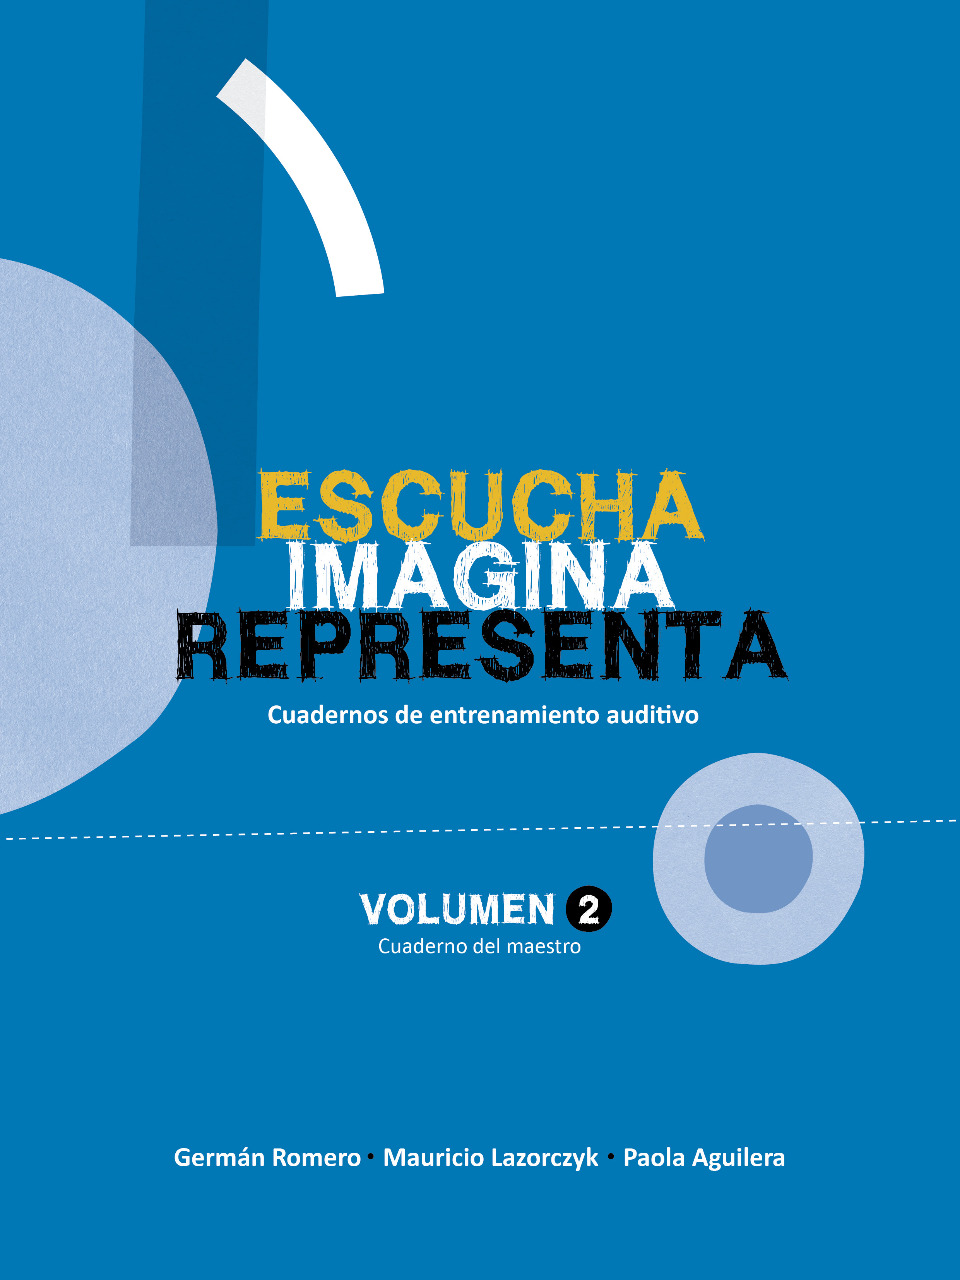 "Escucha-Imagina-Representa" Vol. 2, cuaderno del profesor.